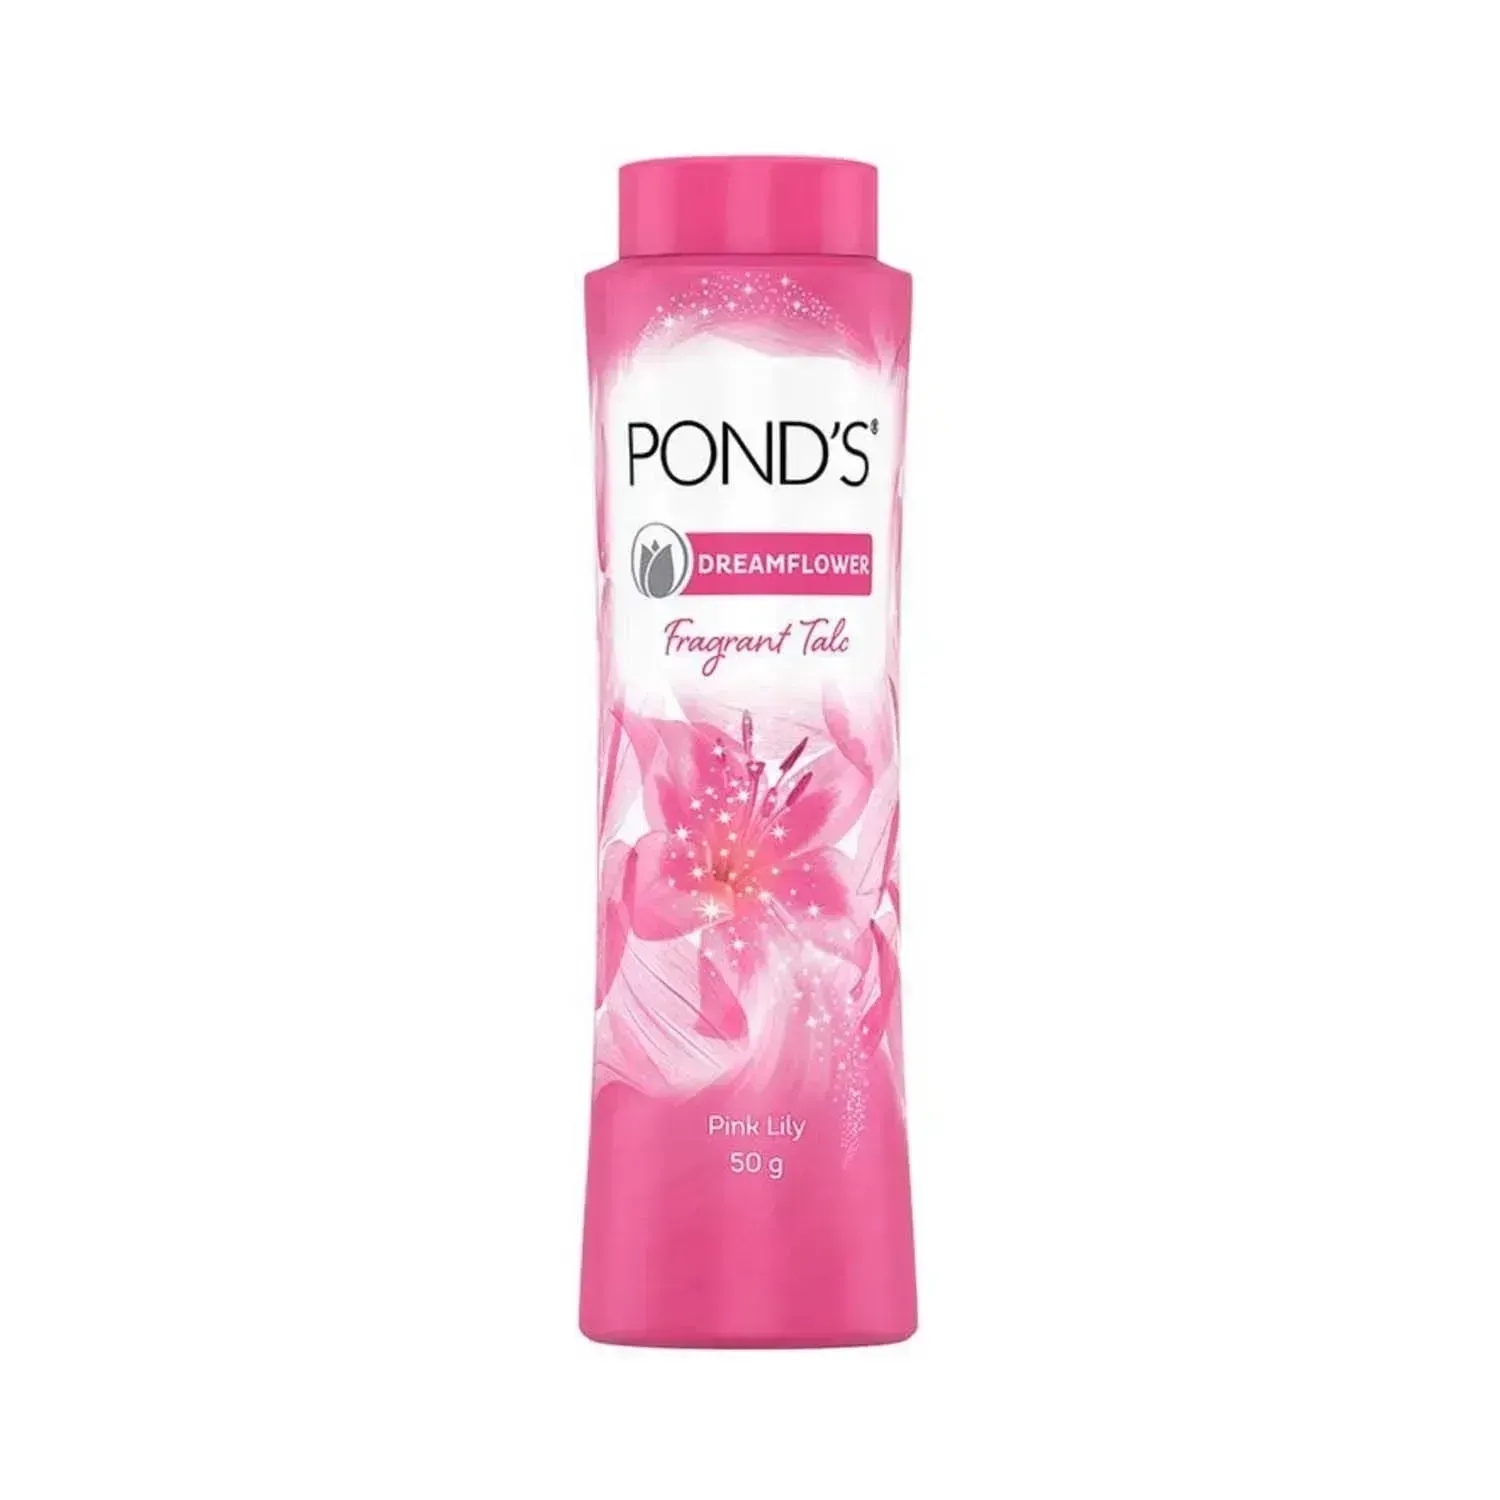 Pond's Dreamflower Fragrant Pink Lily Talc Powder - (50g)